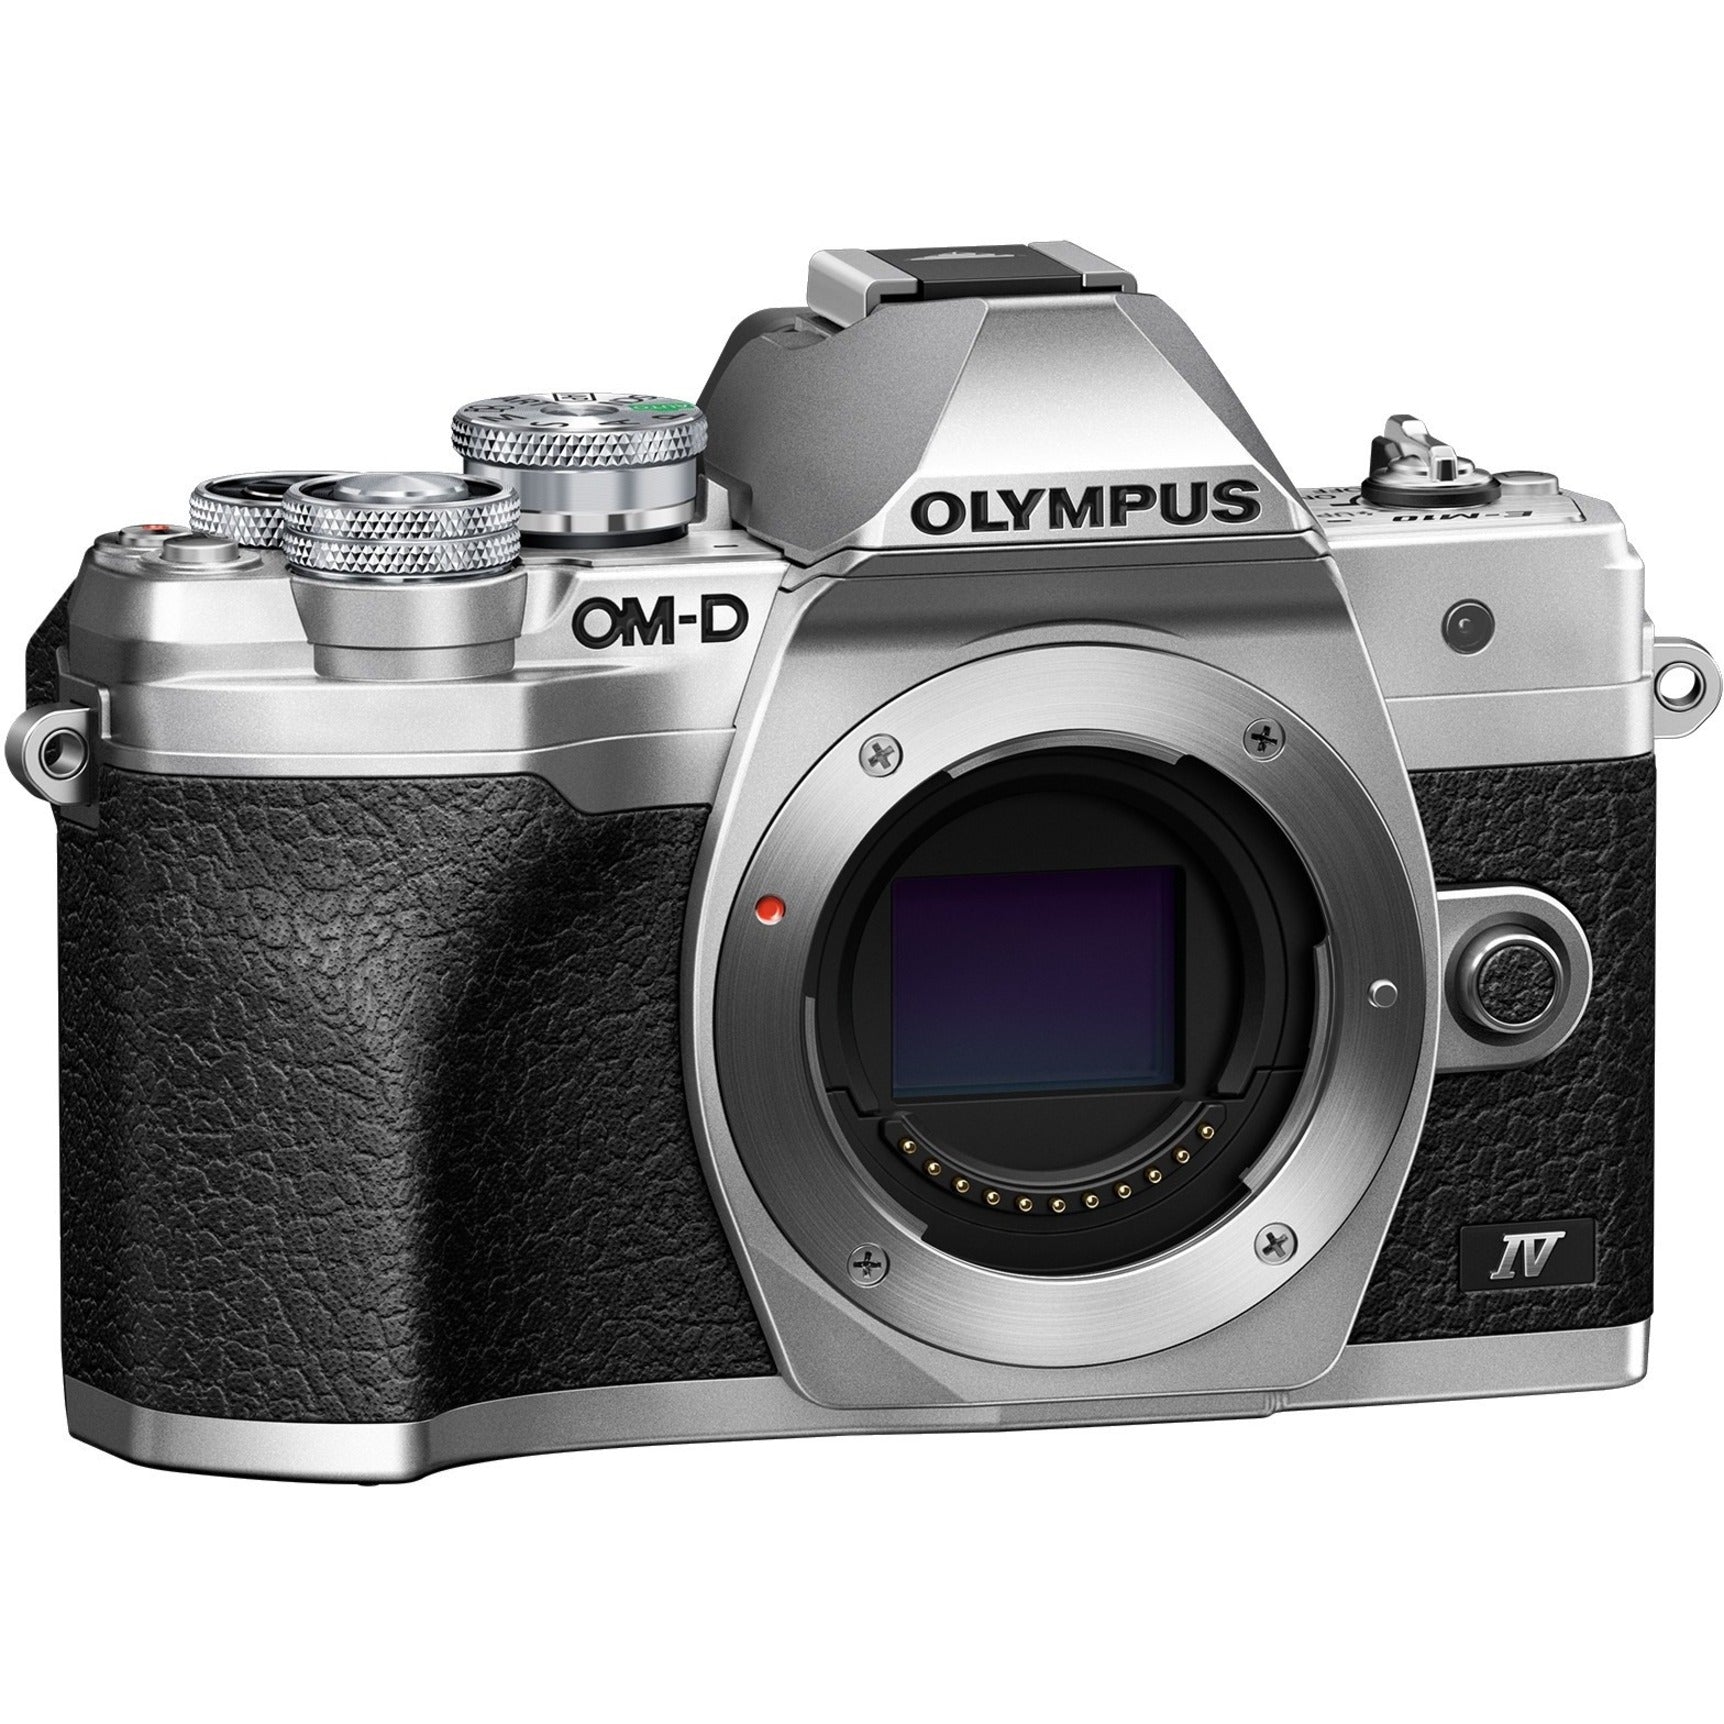 Olympus V207130SU000 OM-D E-M10 Mark IV Mirrorless Camera Body Only, 20.3 Megapixel, Silver